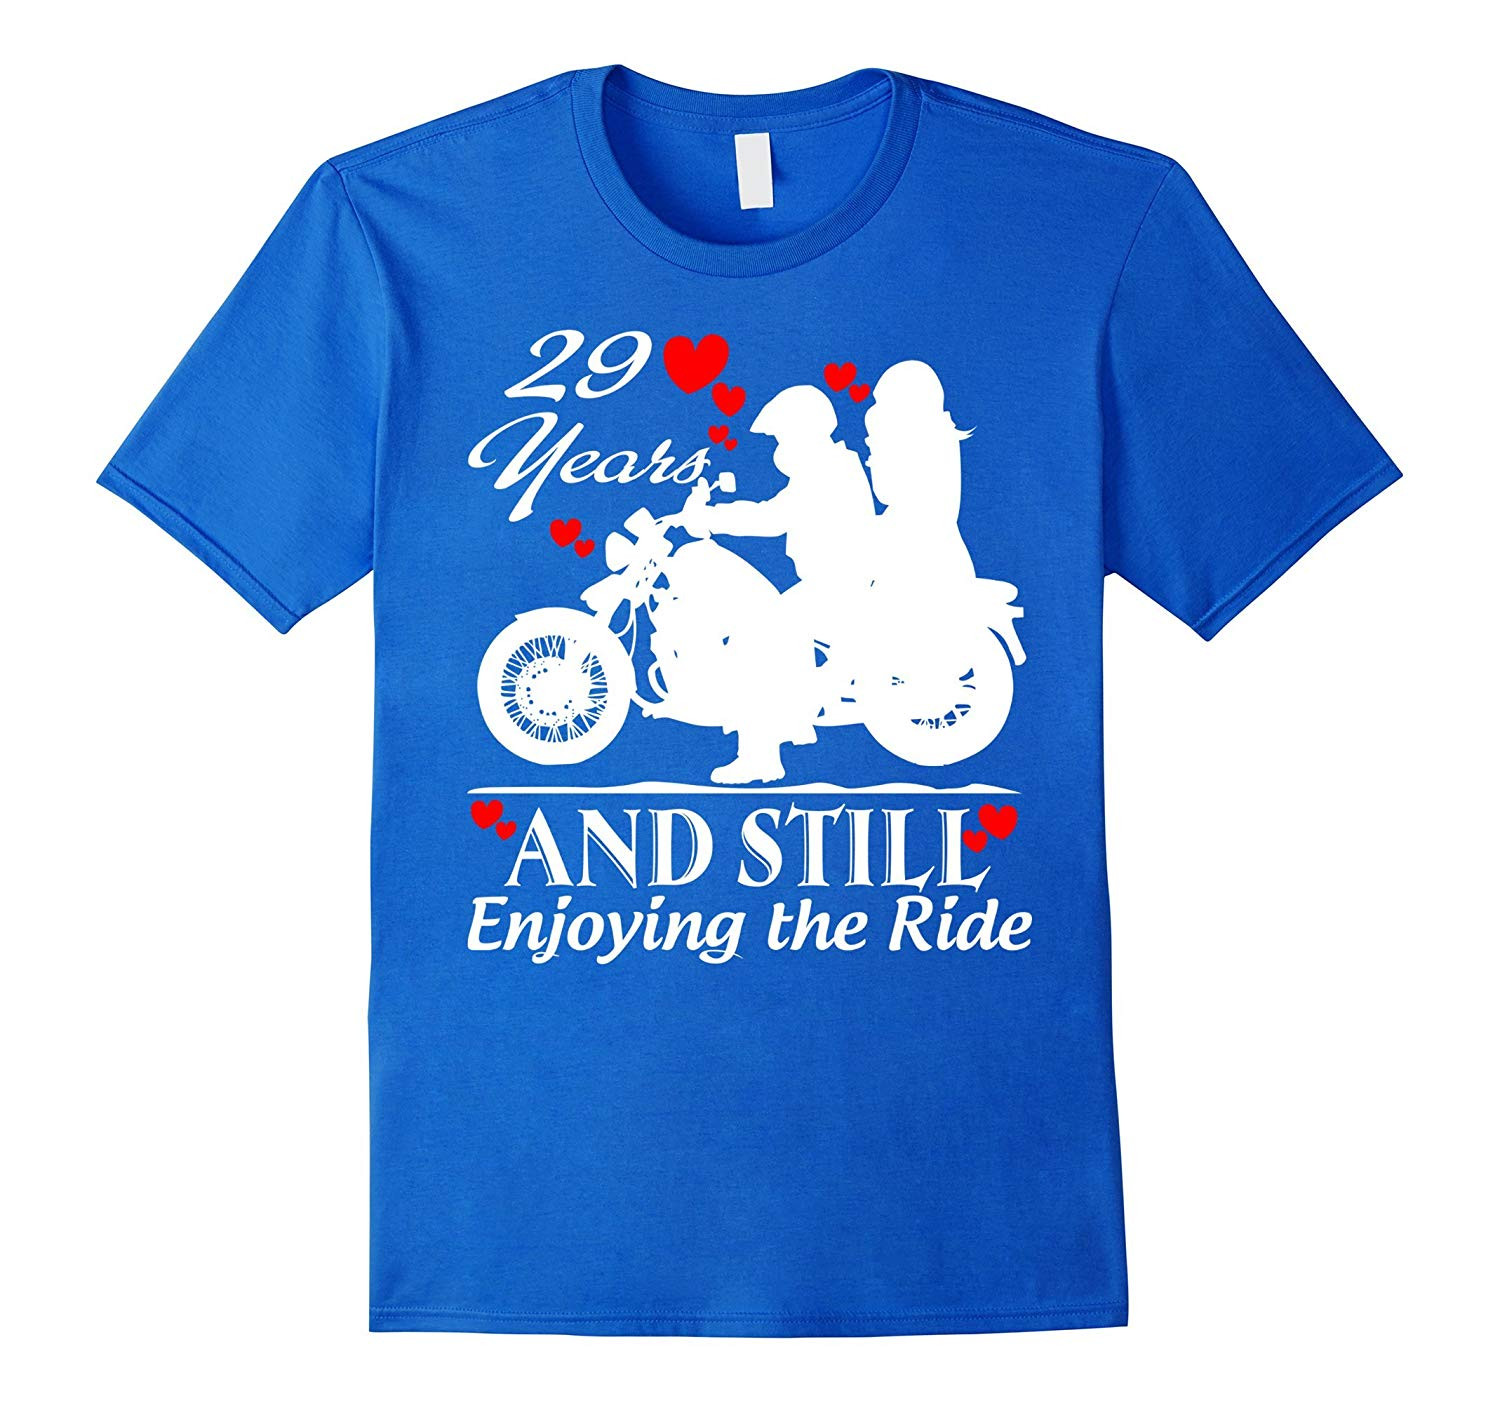 29Th Wedding Anniversary Gift Ideas
 29th Wedding Anniversary Gifts Shirt – Perfect Couple